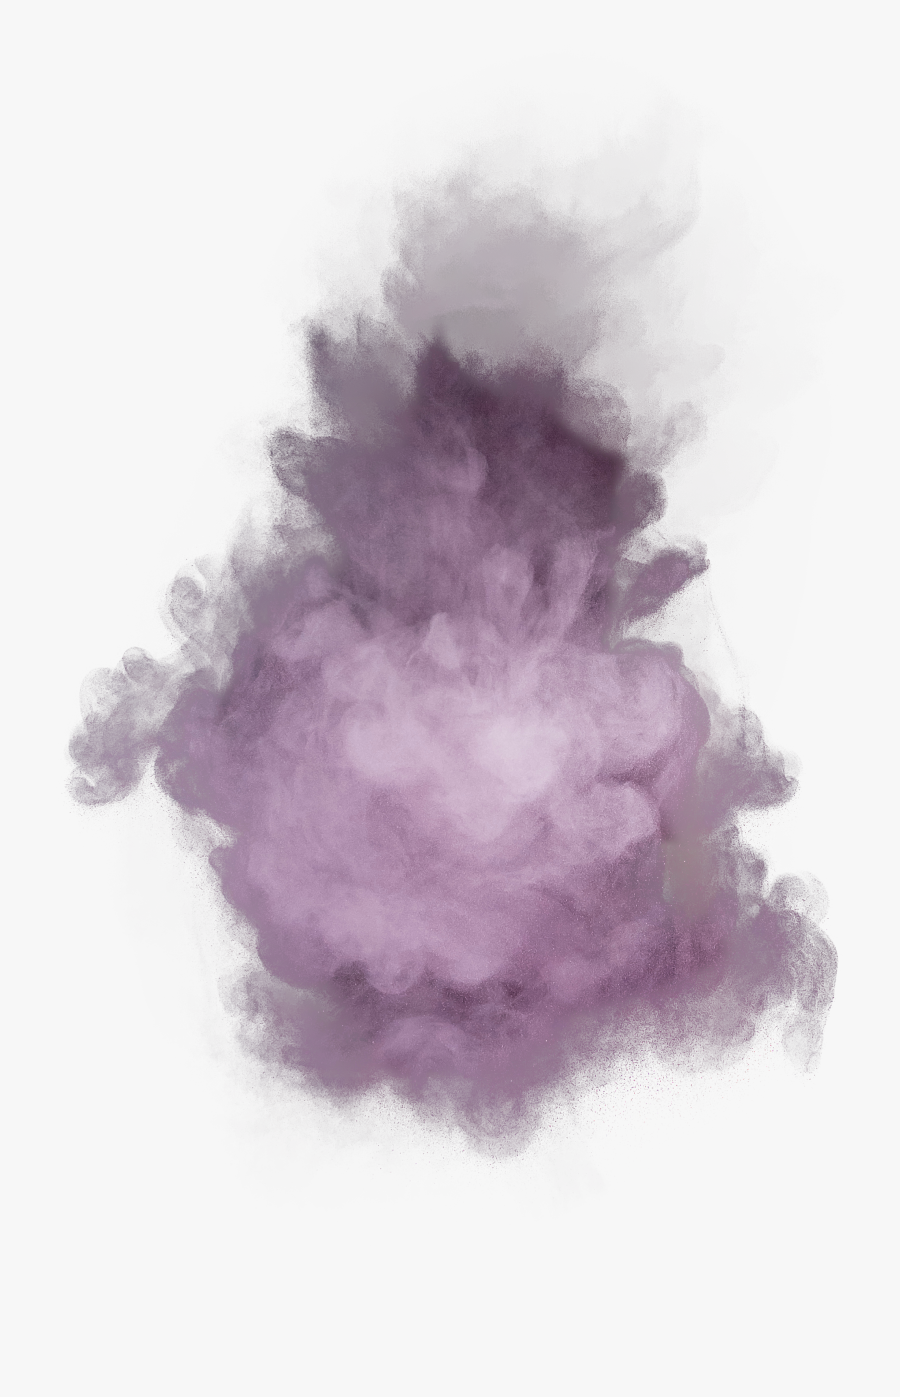 Purple Powder Explosive Material Png Image - Purple Powder Explosion Png, Transparent Clipart